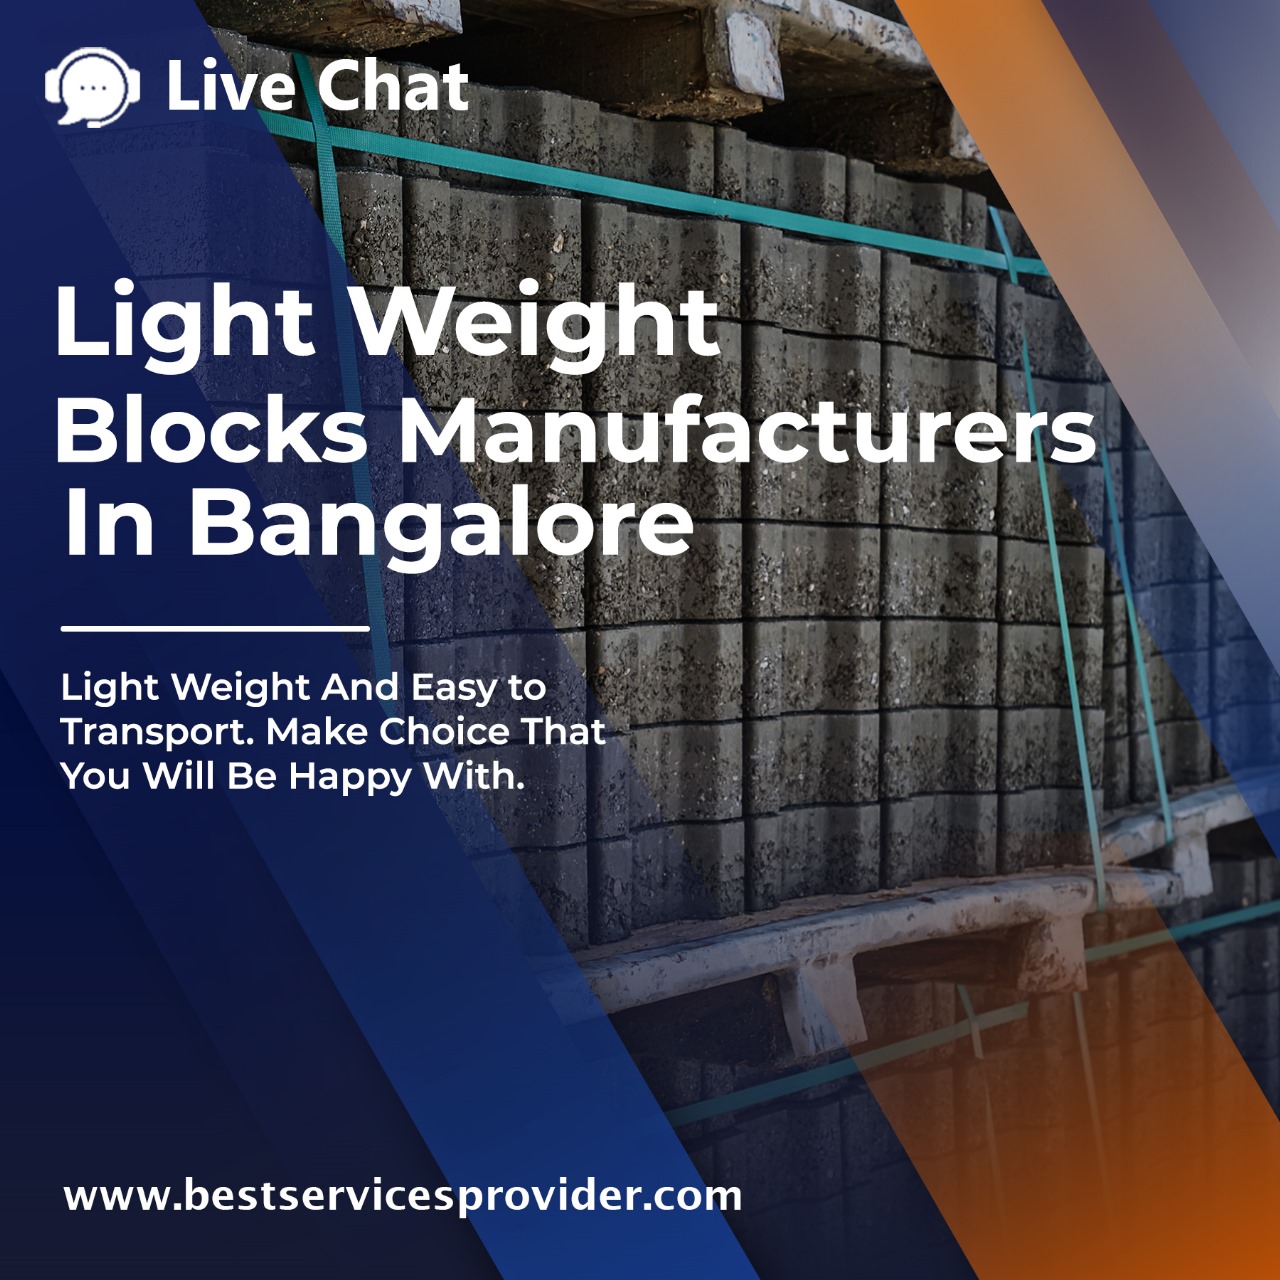 Light Weight Blocks Manufacturers In Bangalore